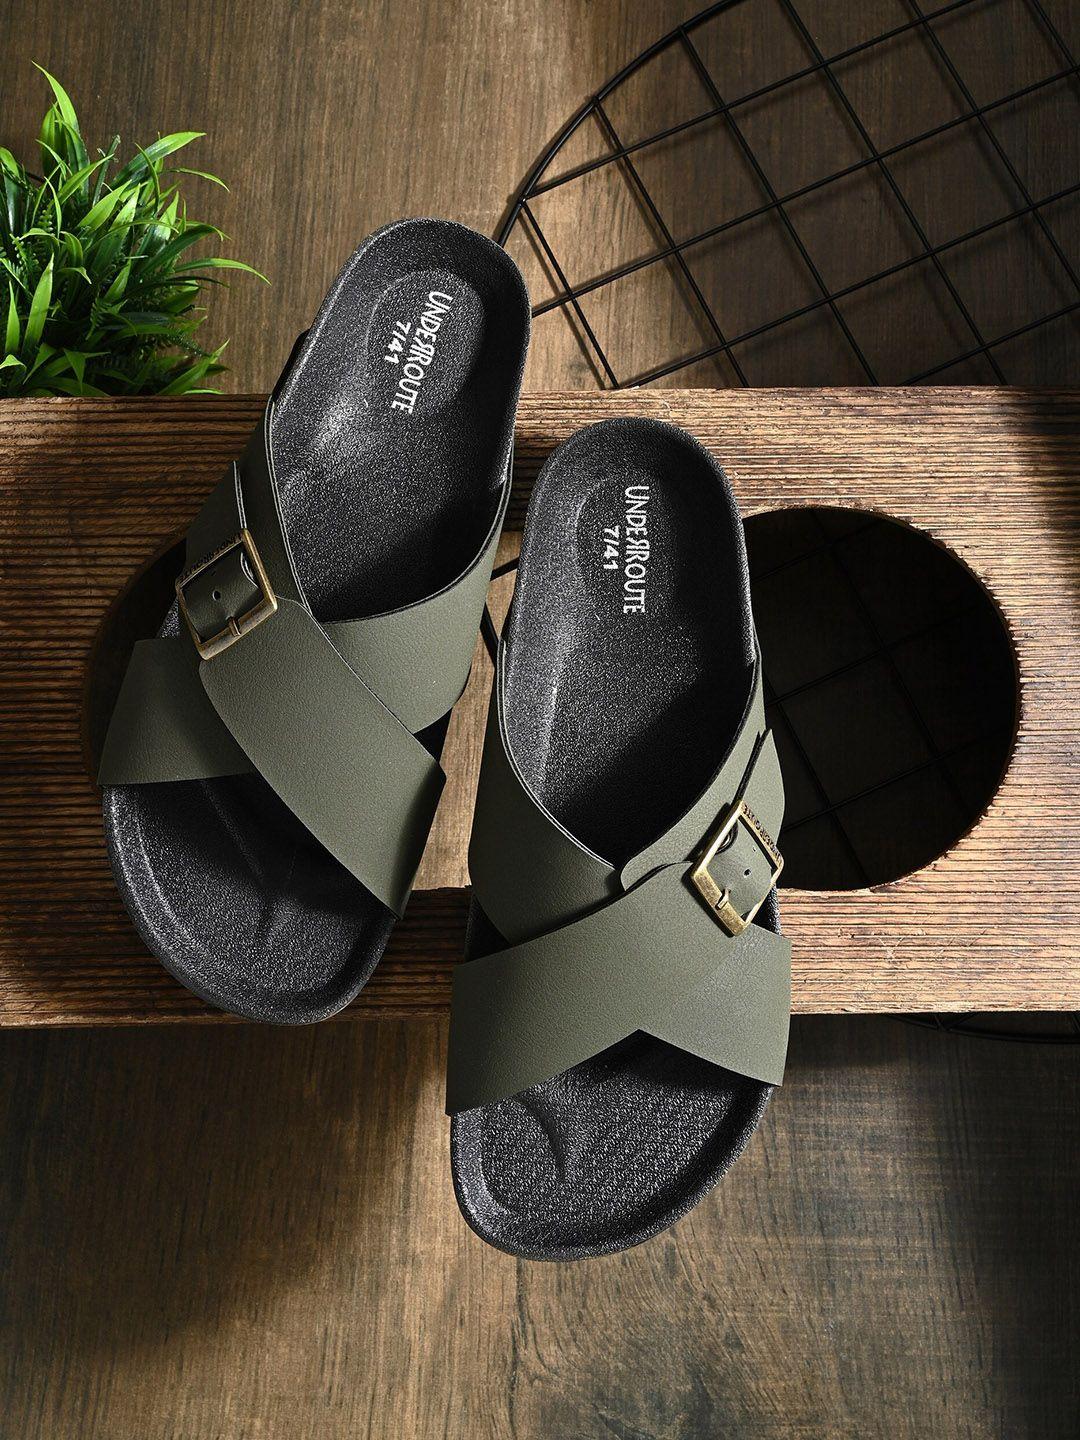 underroute-men-cross-strap-comfort-sandals-with-buckle-detail